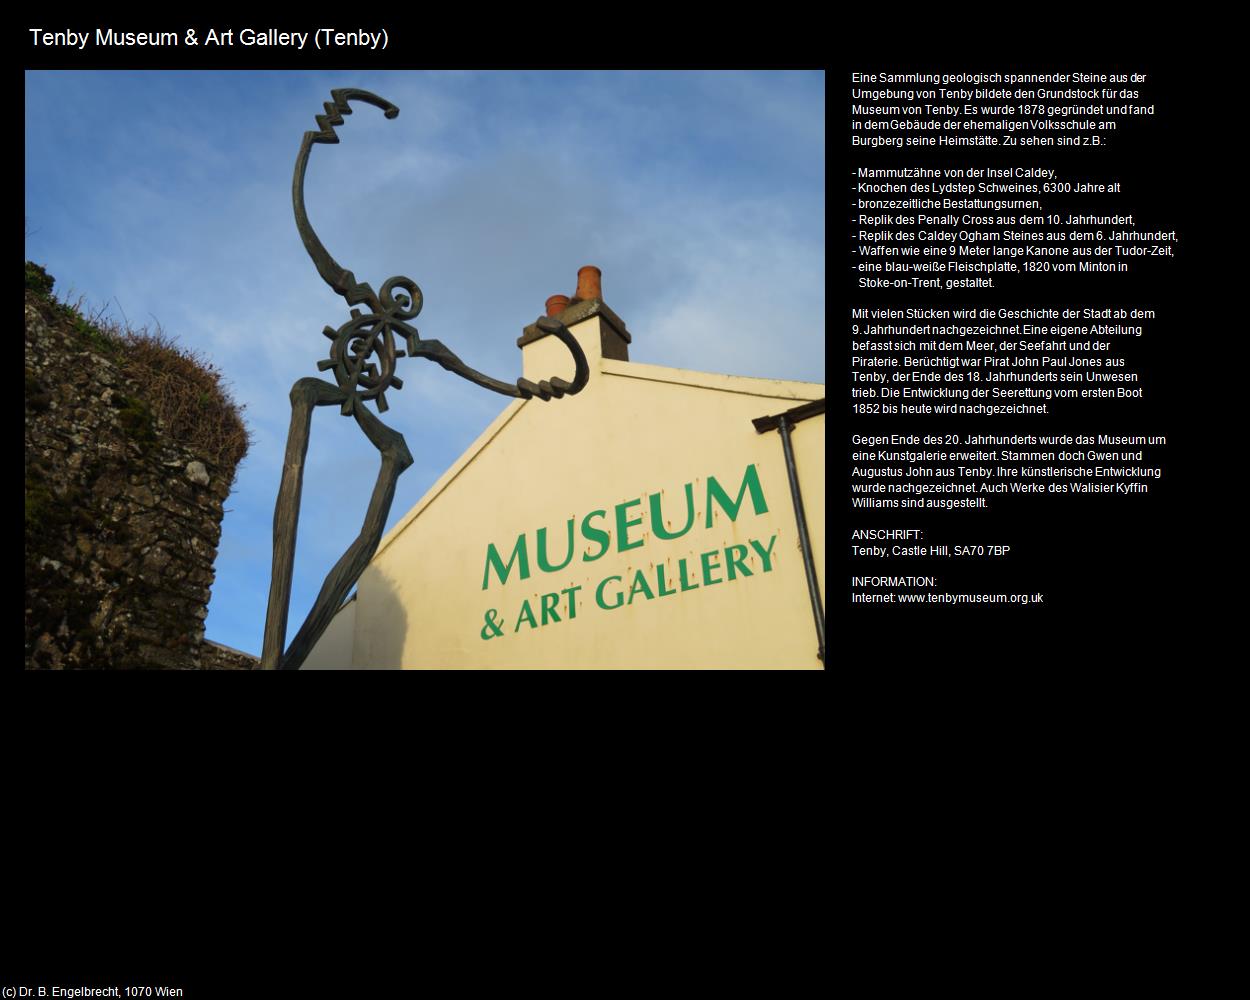 Tenby Museum & Art Gallery  (Tenby, Wales) in Kulturatlas-ENGLAND und WALES